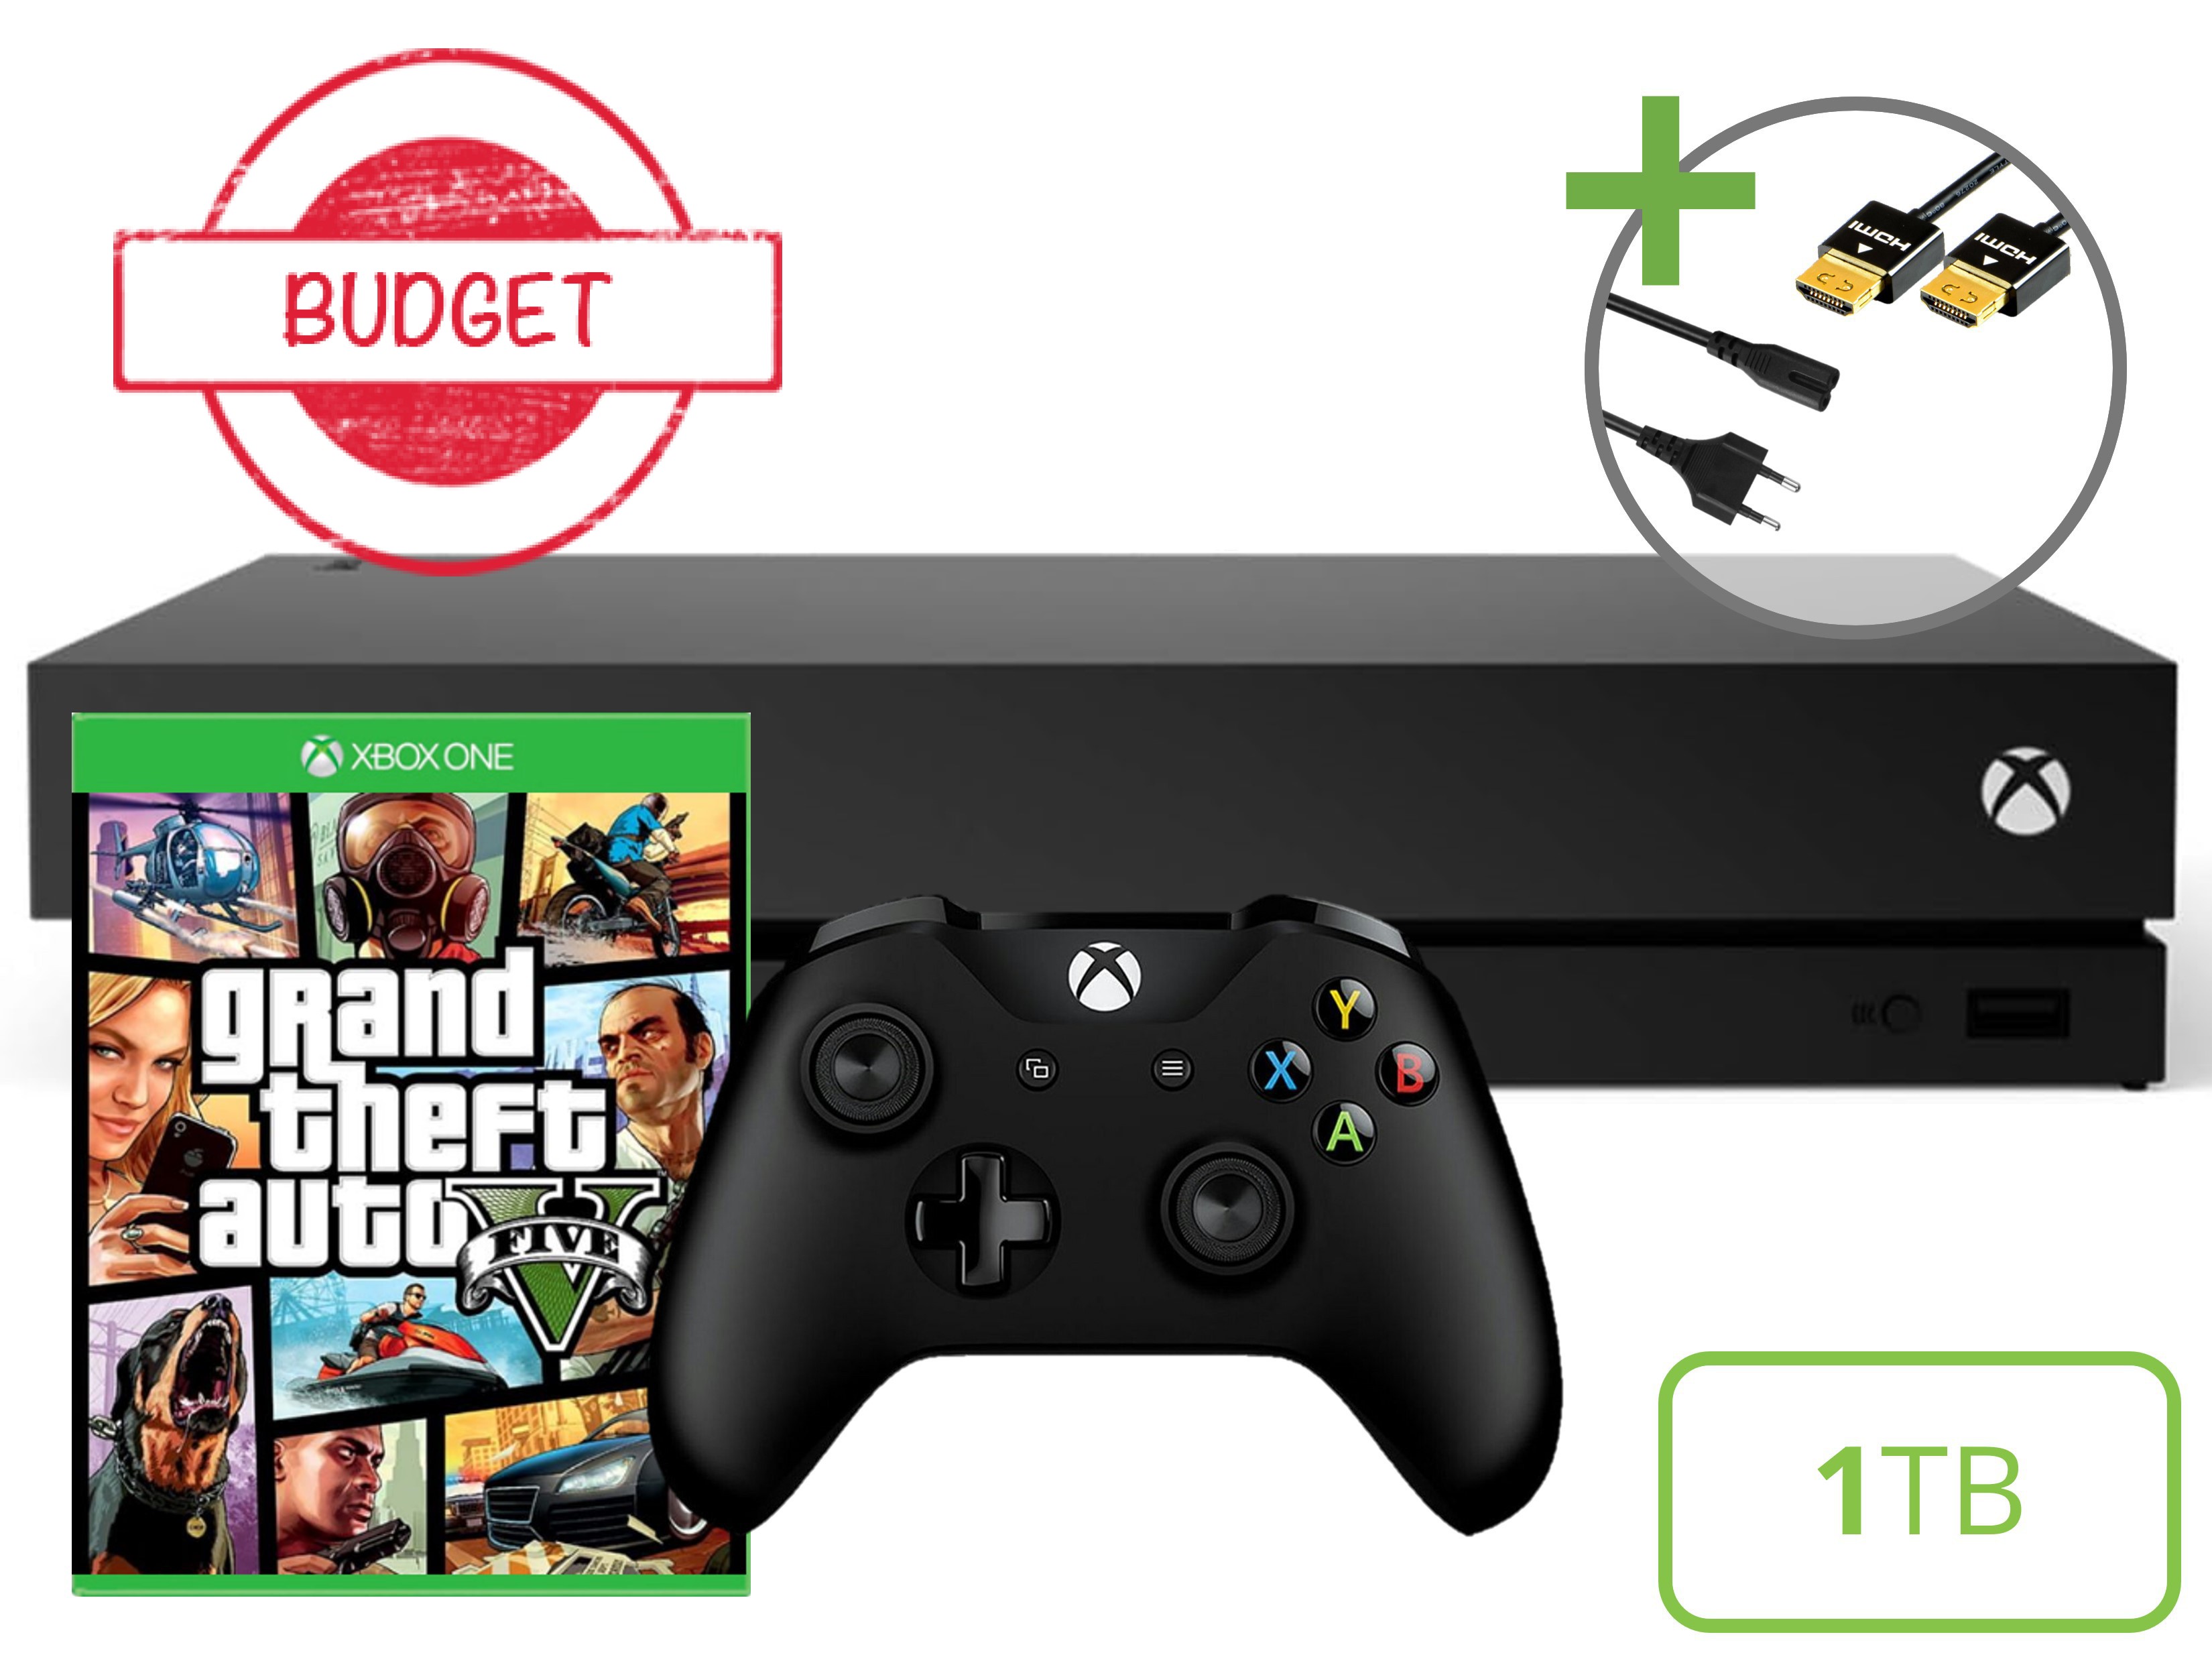 Microsoft Xbox One X Starter Pack - 1TB GTA V Edition - Budget Kopen | Xbox One Hardware